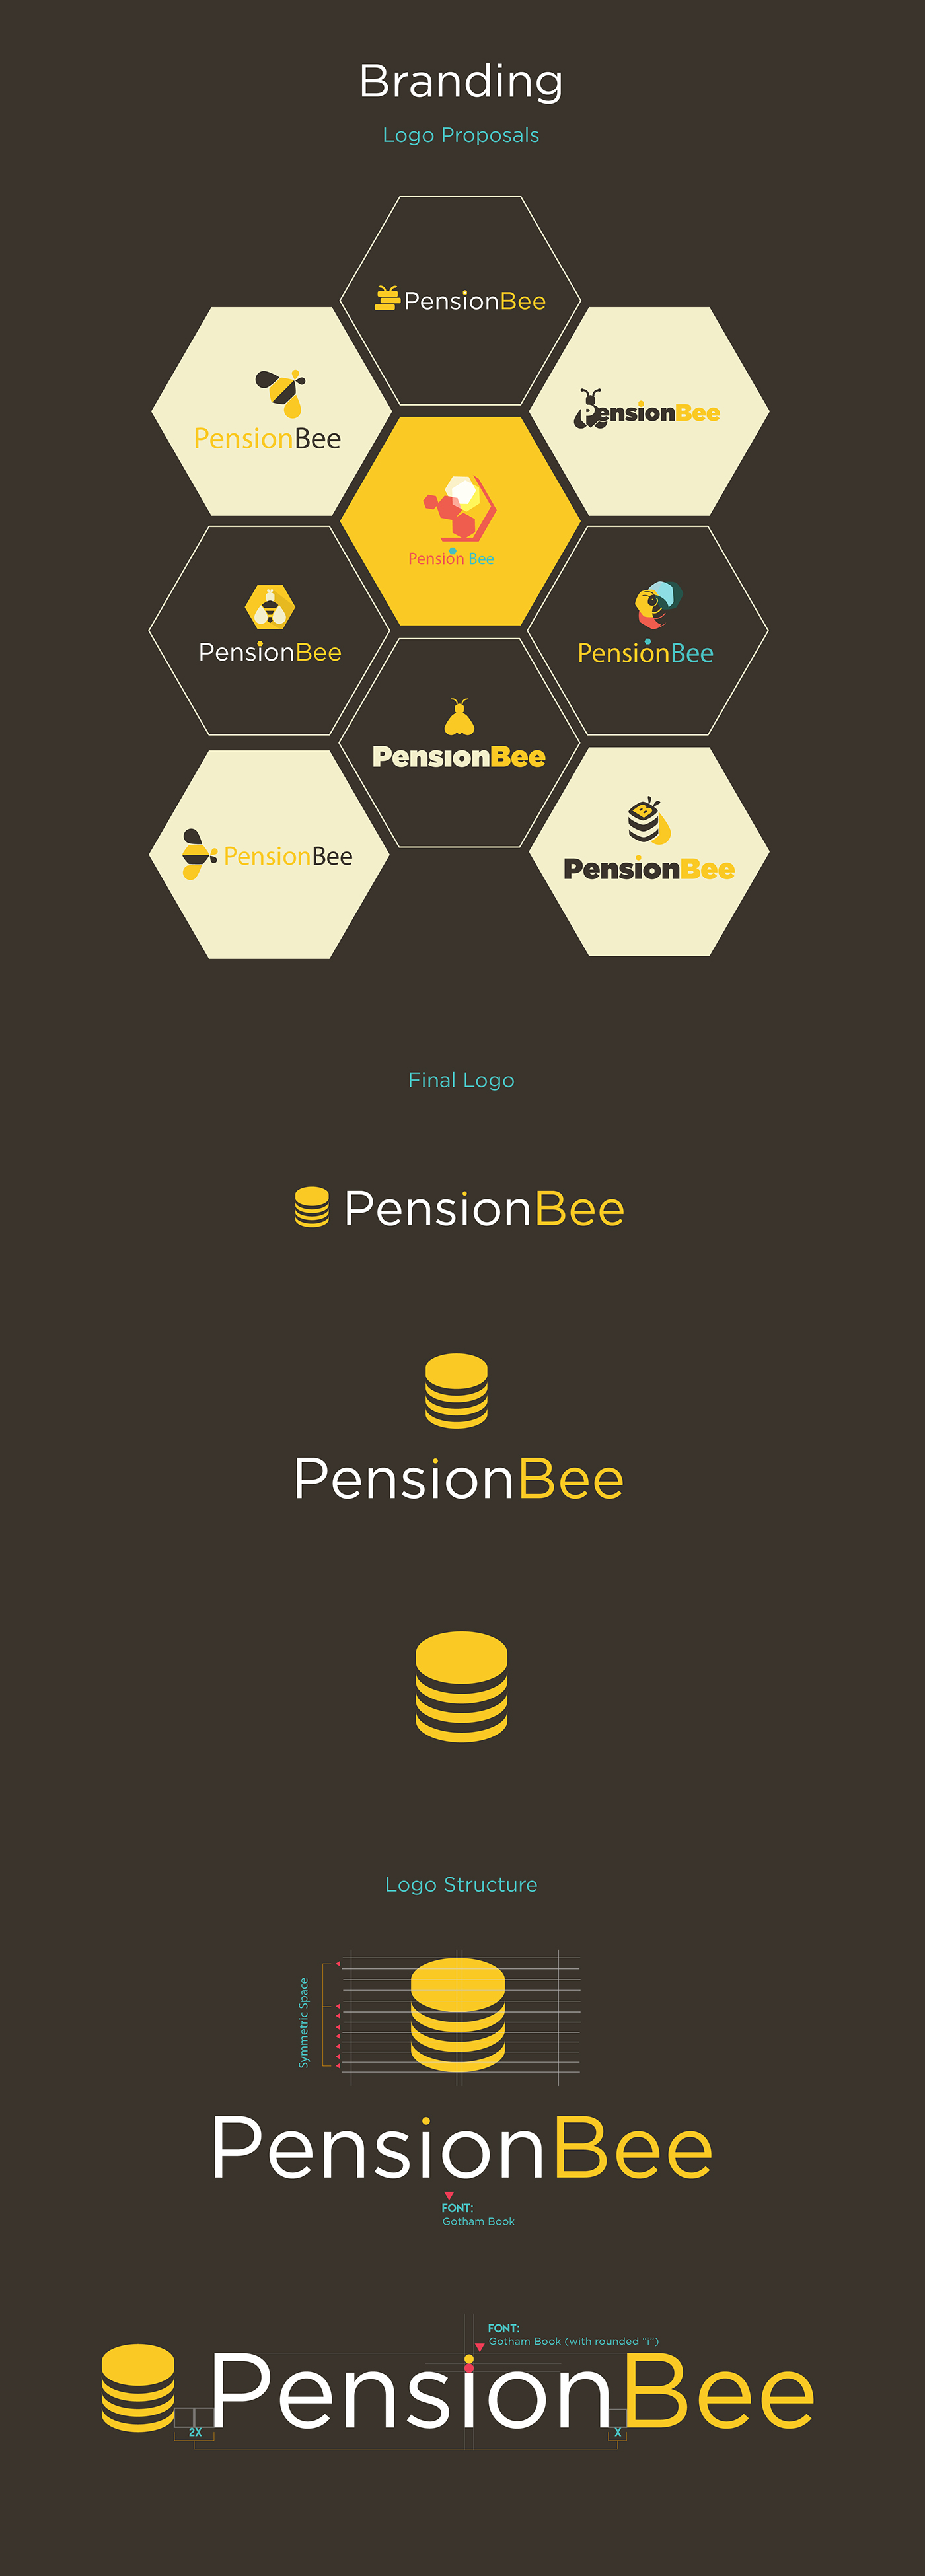 Adobe Portfolio animate pension PensionBee nucco brain studio London UK honey explanimation brand design identity buzz showcase Fun